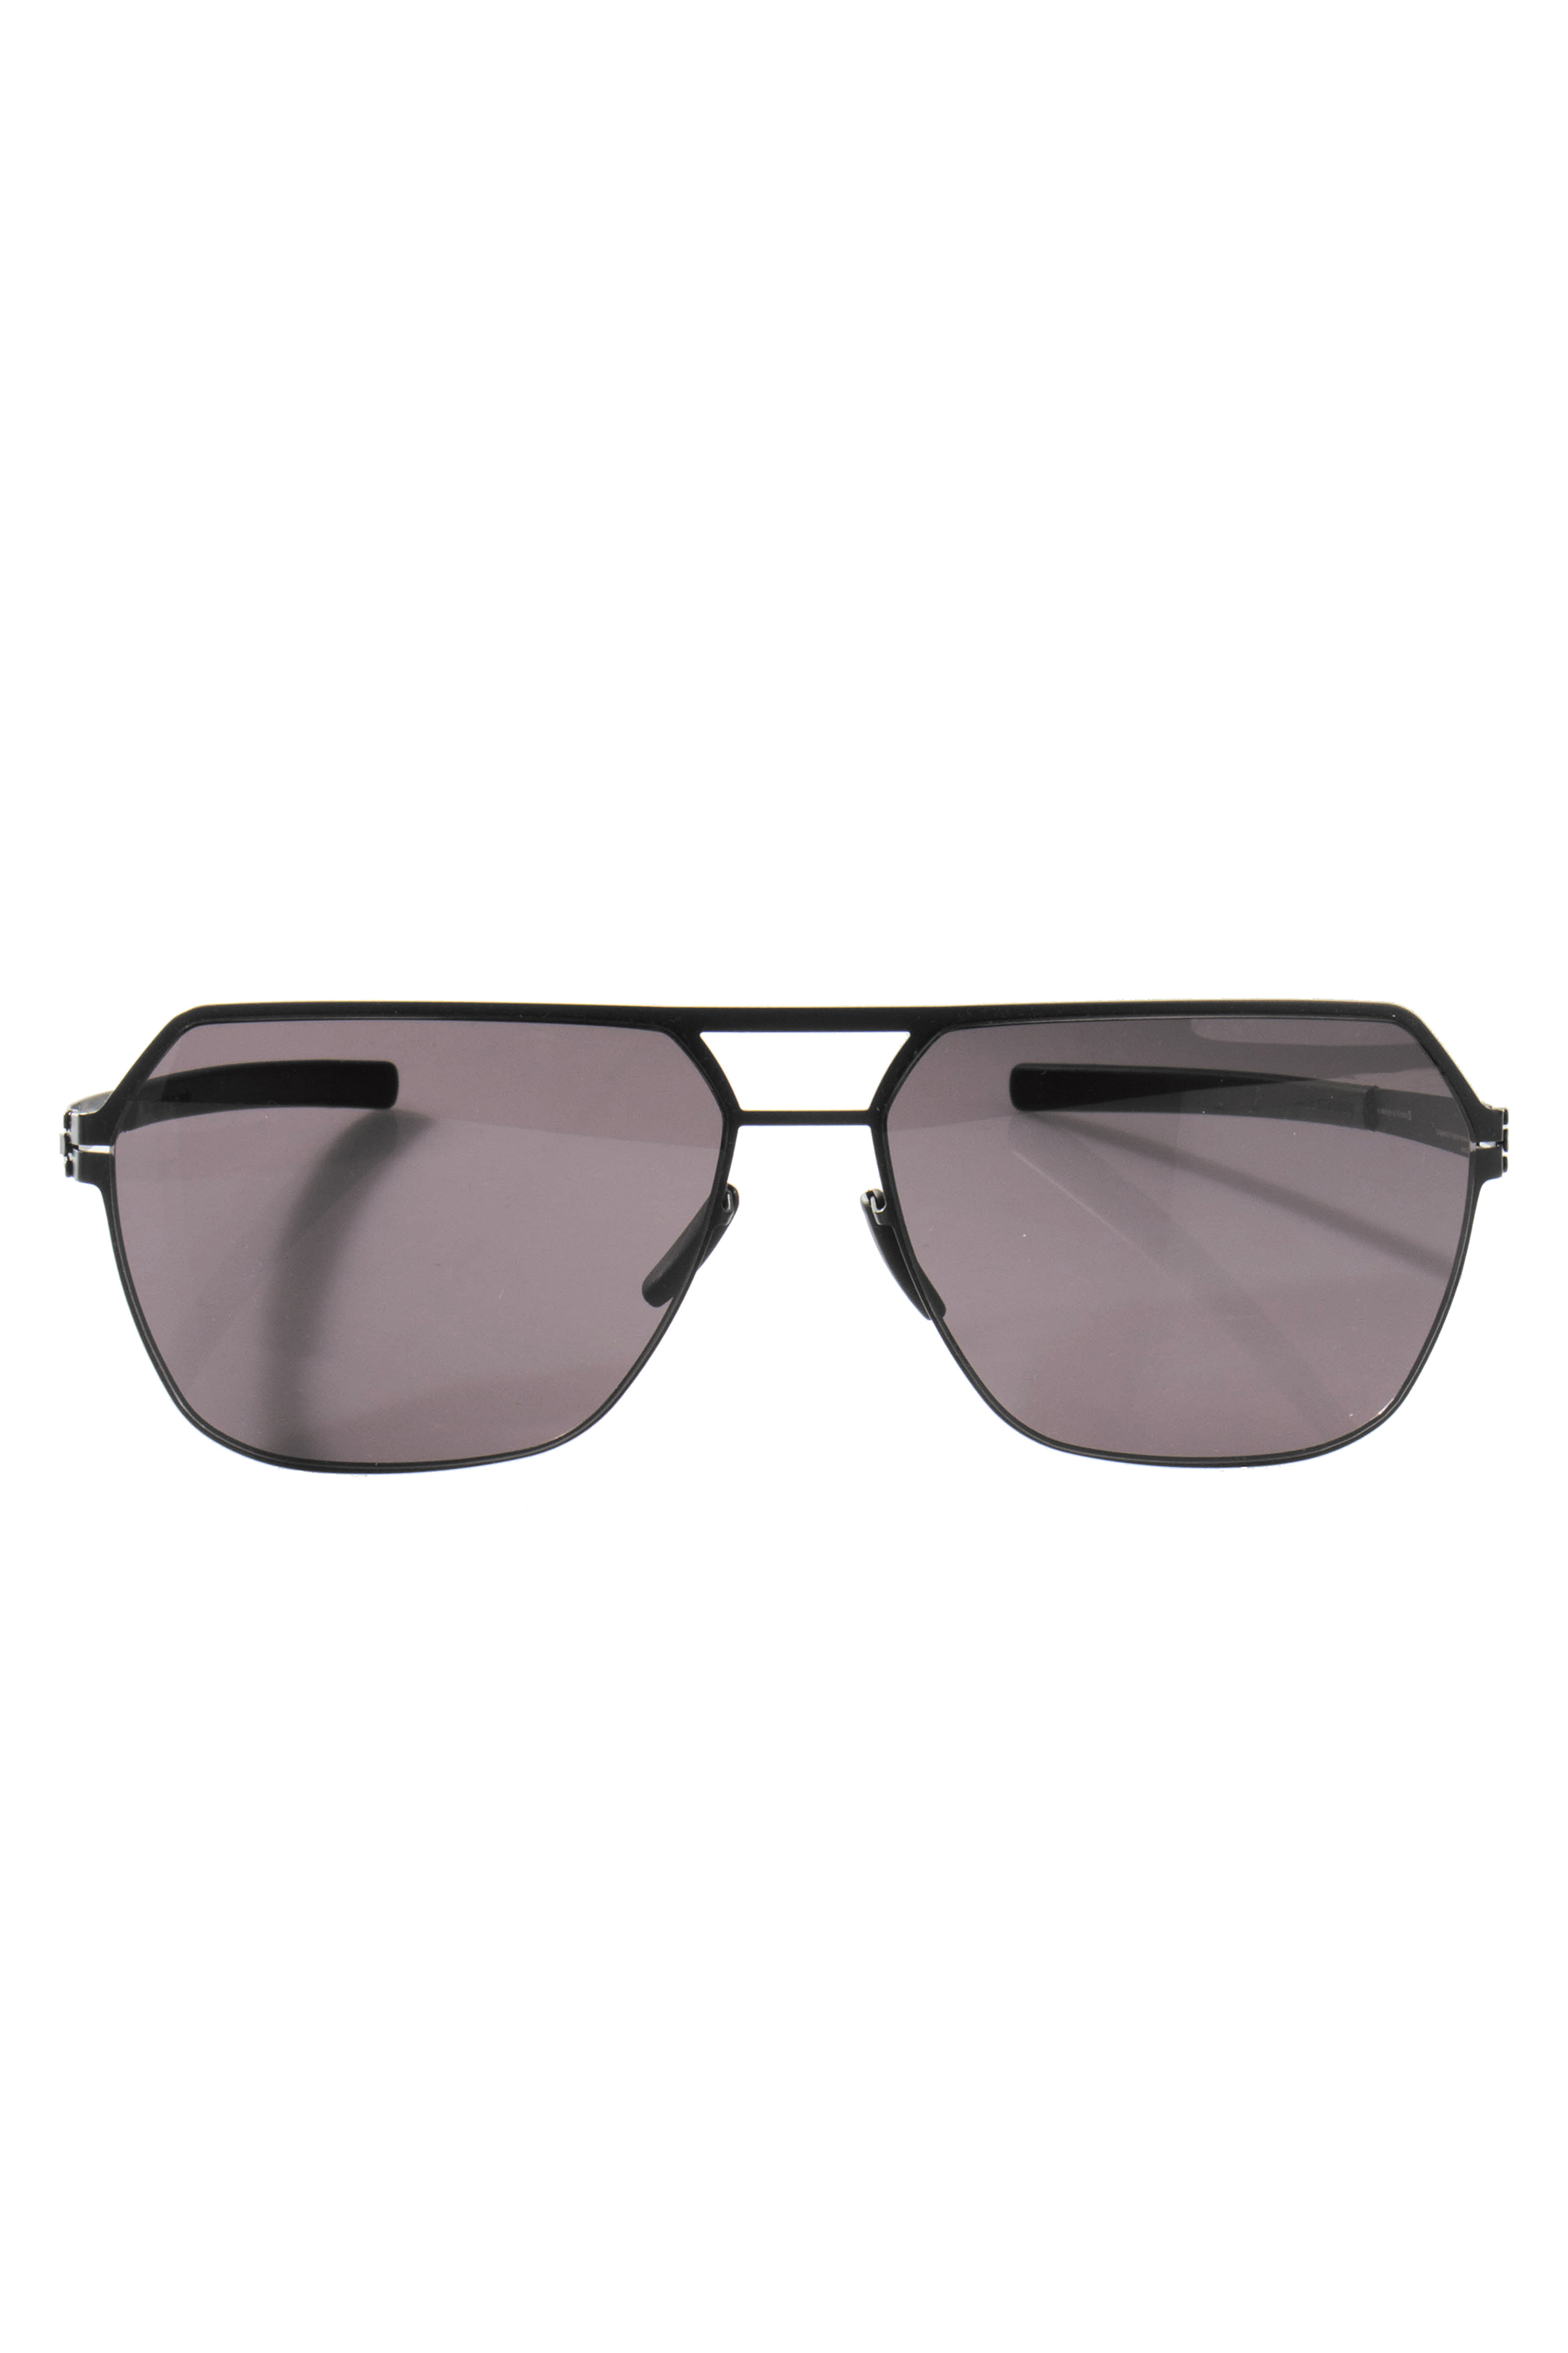 ic! berlin Sunglasses Boris N. | Sunglasses | Bags & Accessories | Men ...